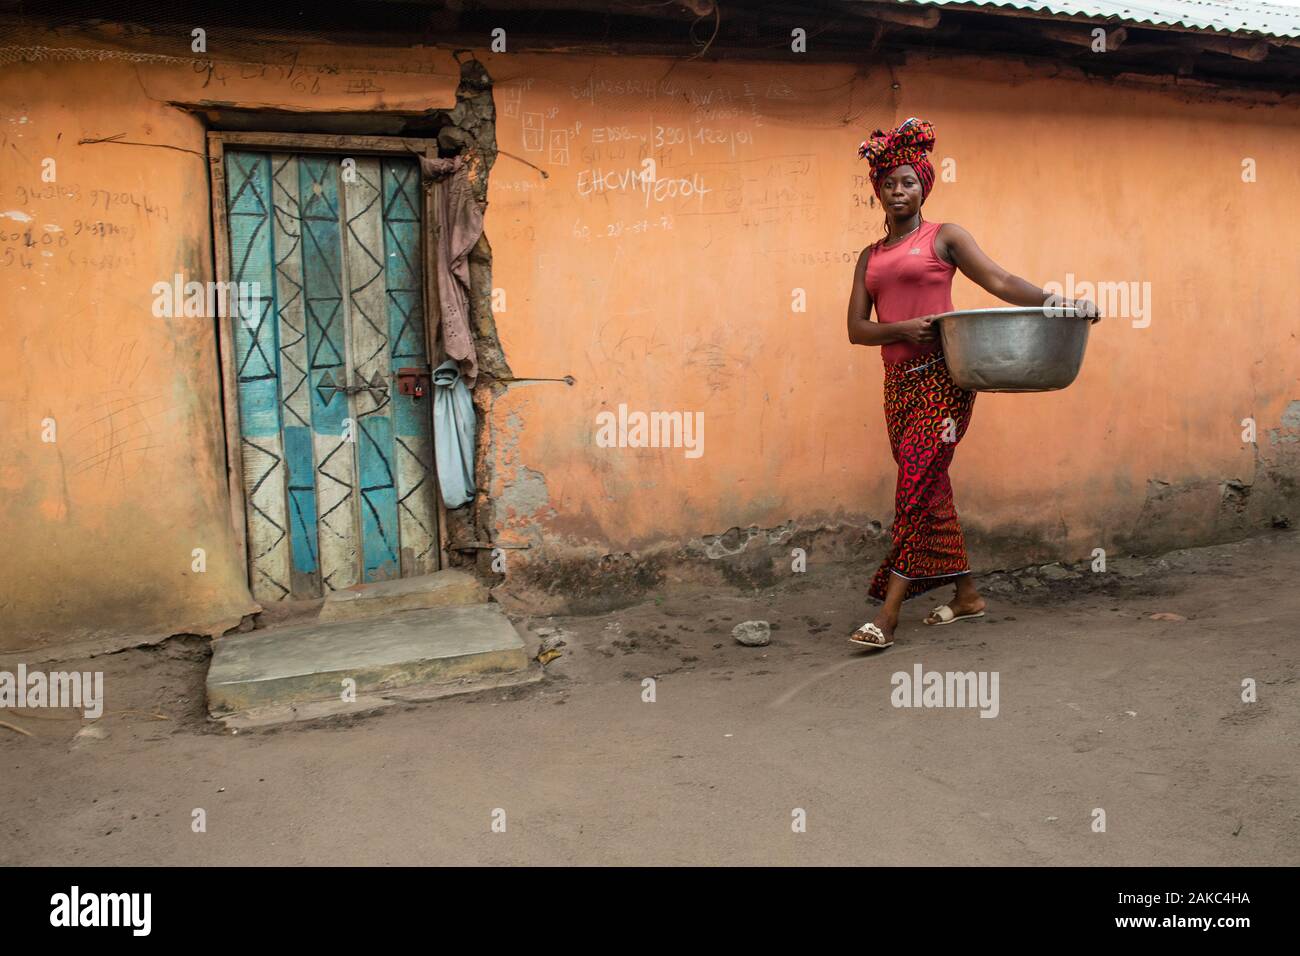 Benin, Natitingou district, woman back from washing clothes Stock Photo